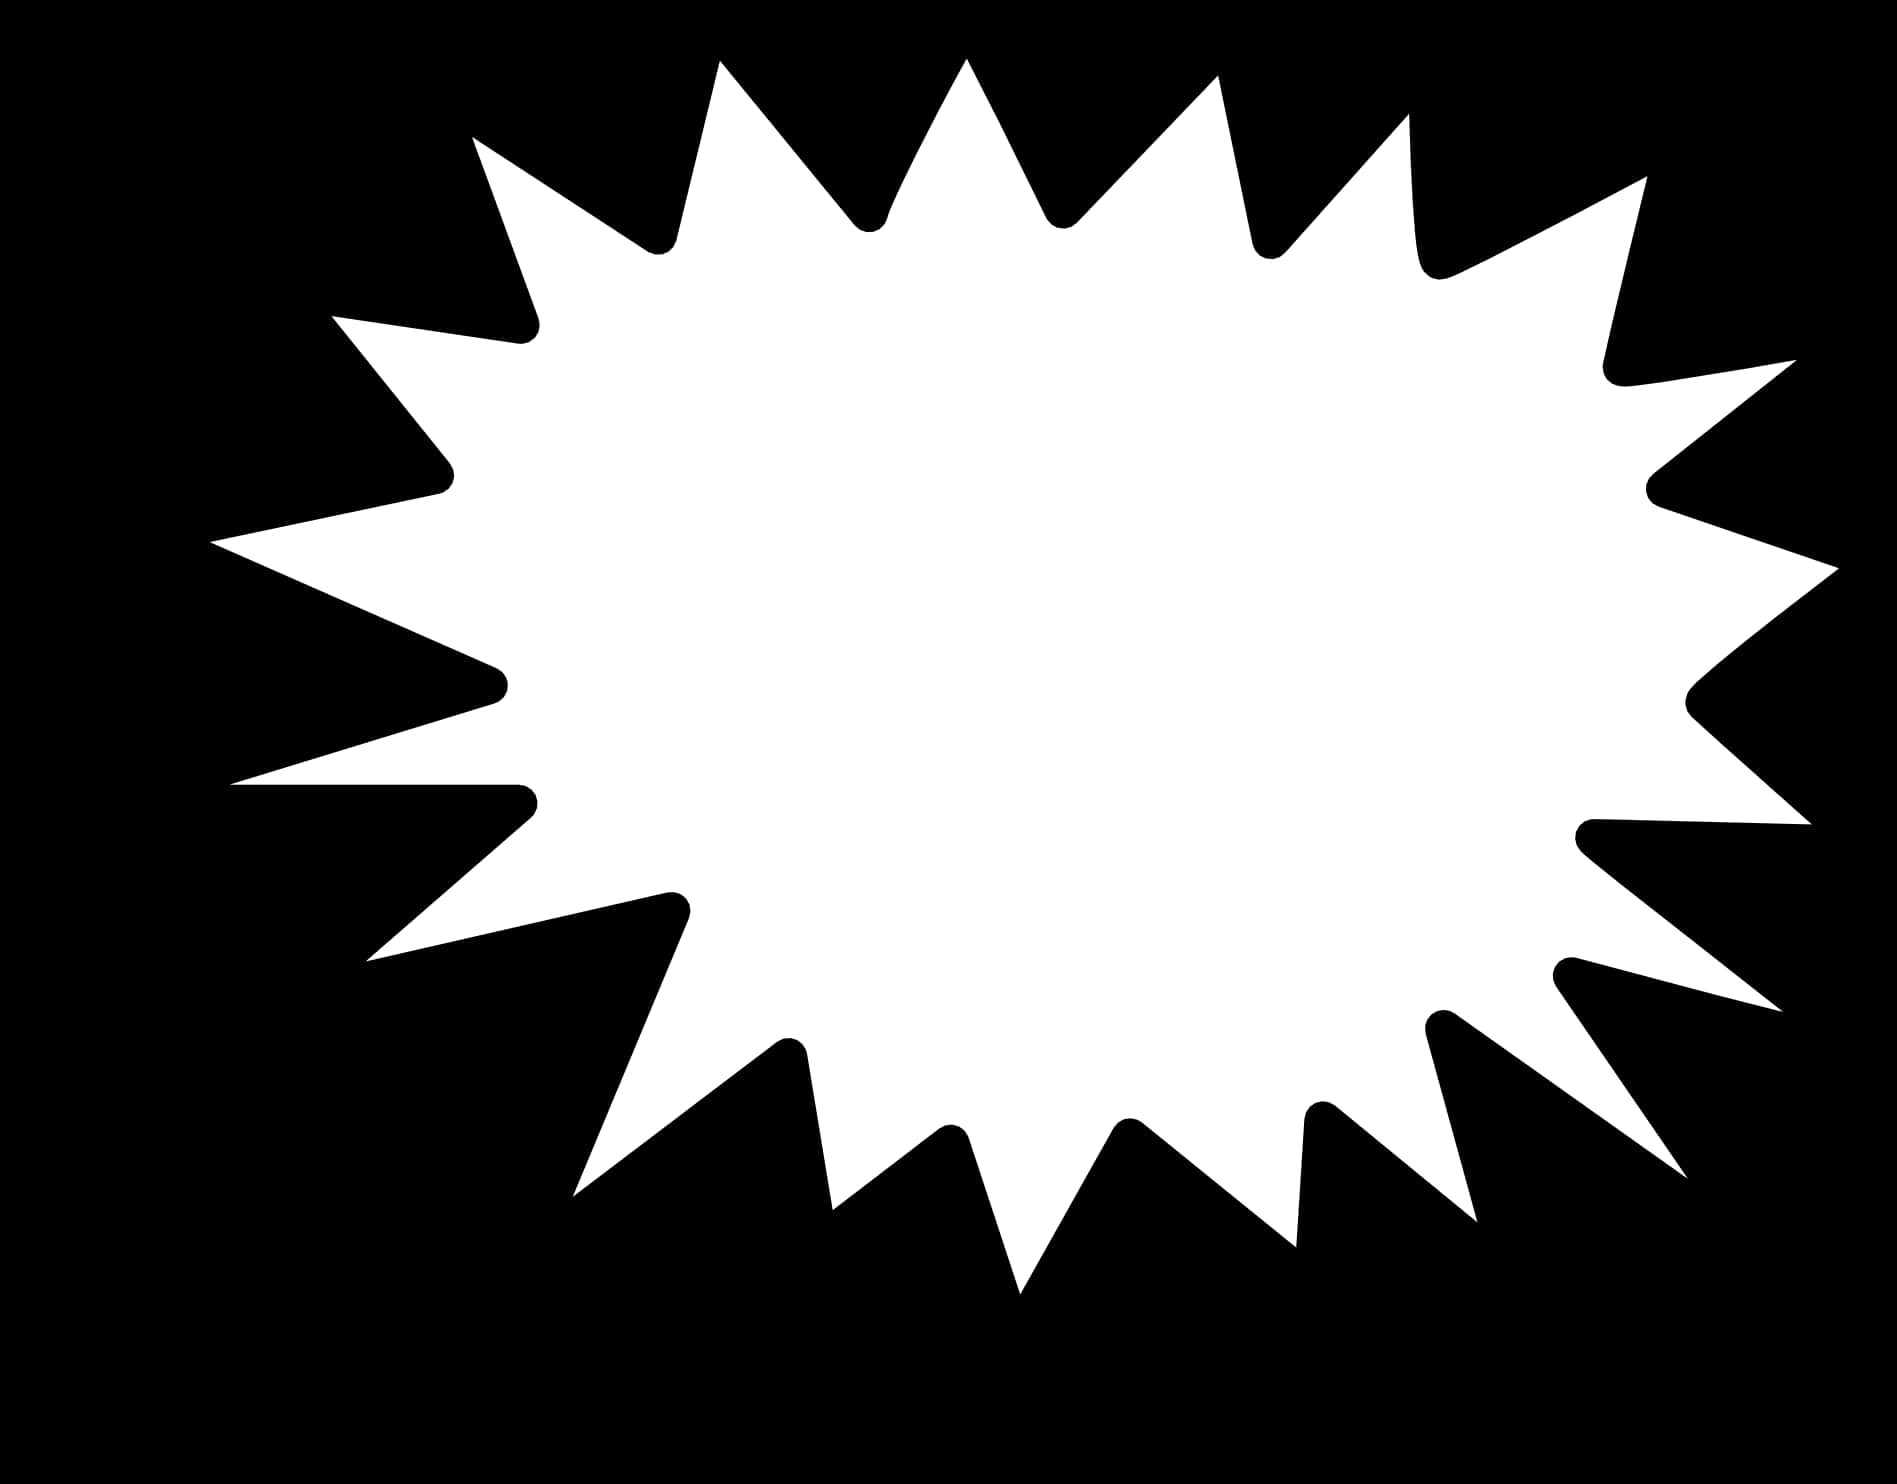 A White Starburst On A Black Background